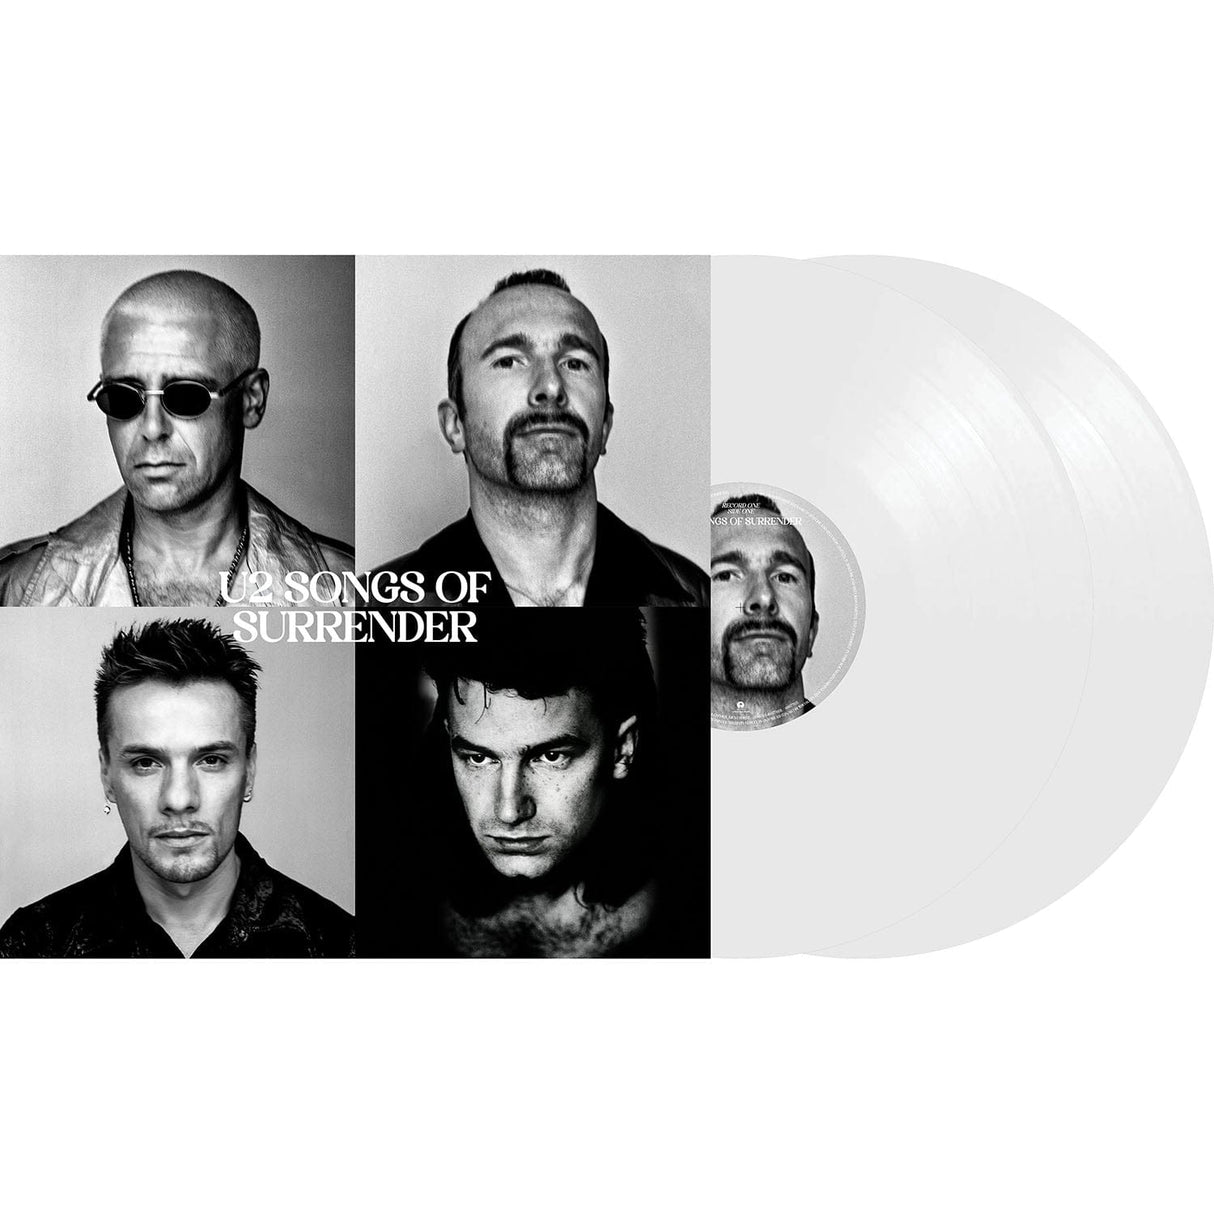 U2 - Songs of Surrender - 2LP - 180g Opaque White Vinyl